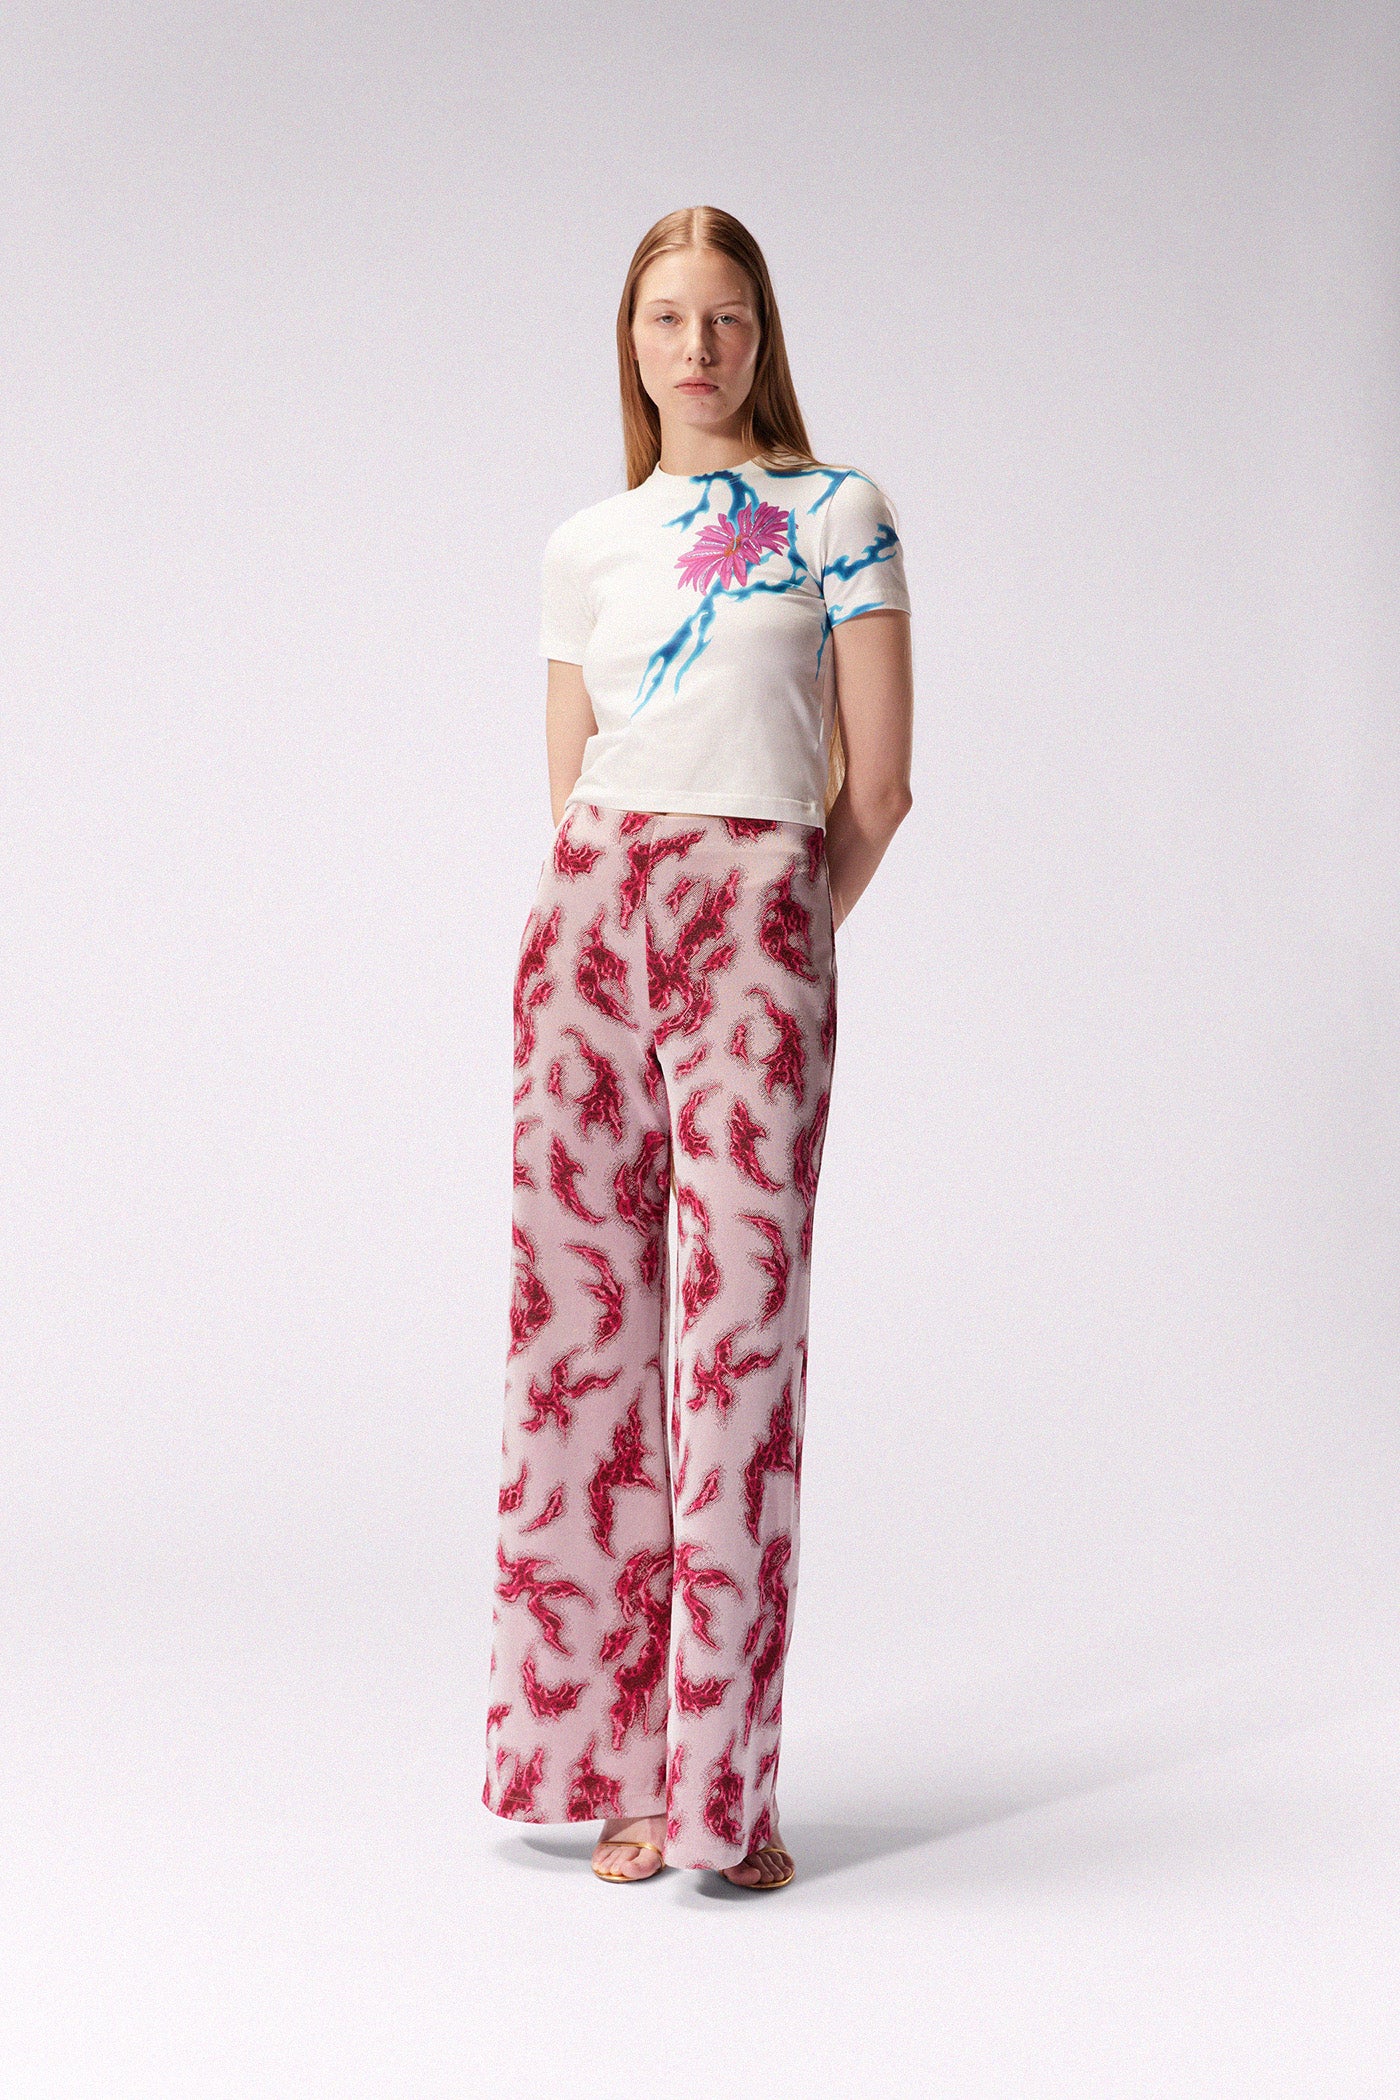 Pink High-Waisted Pants - Shannon H. Sullivan | Pink pants outfit, Paris  outfit ideas, Light pink pants